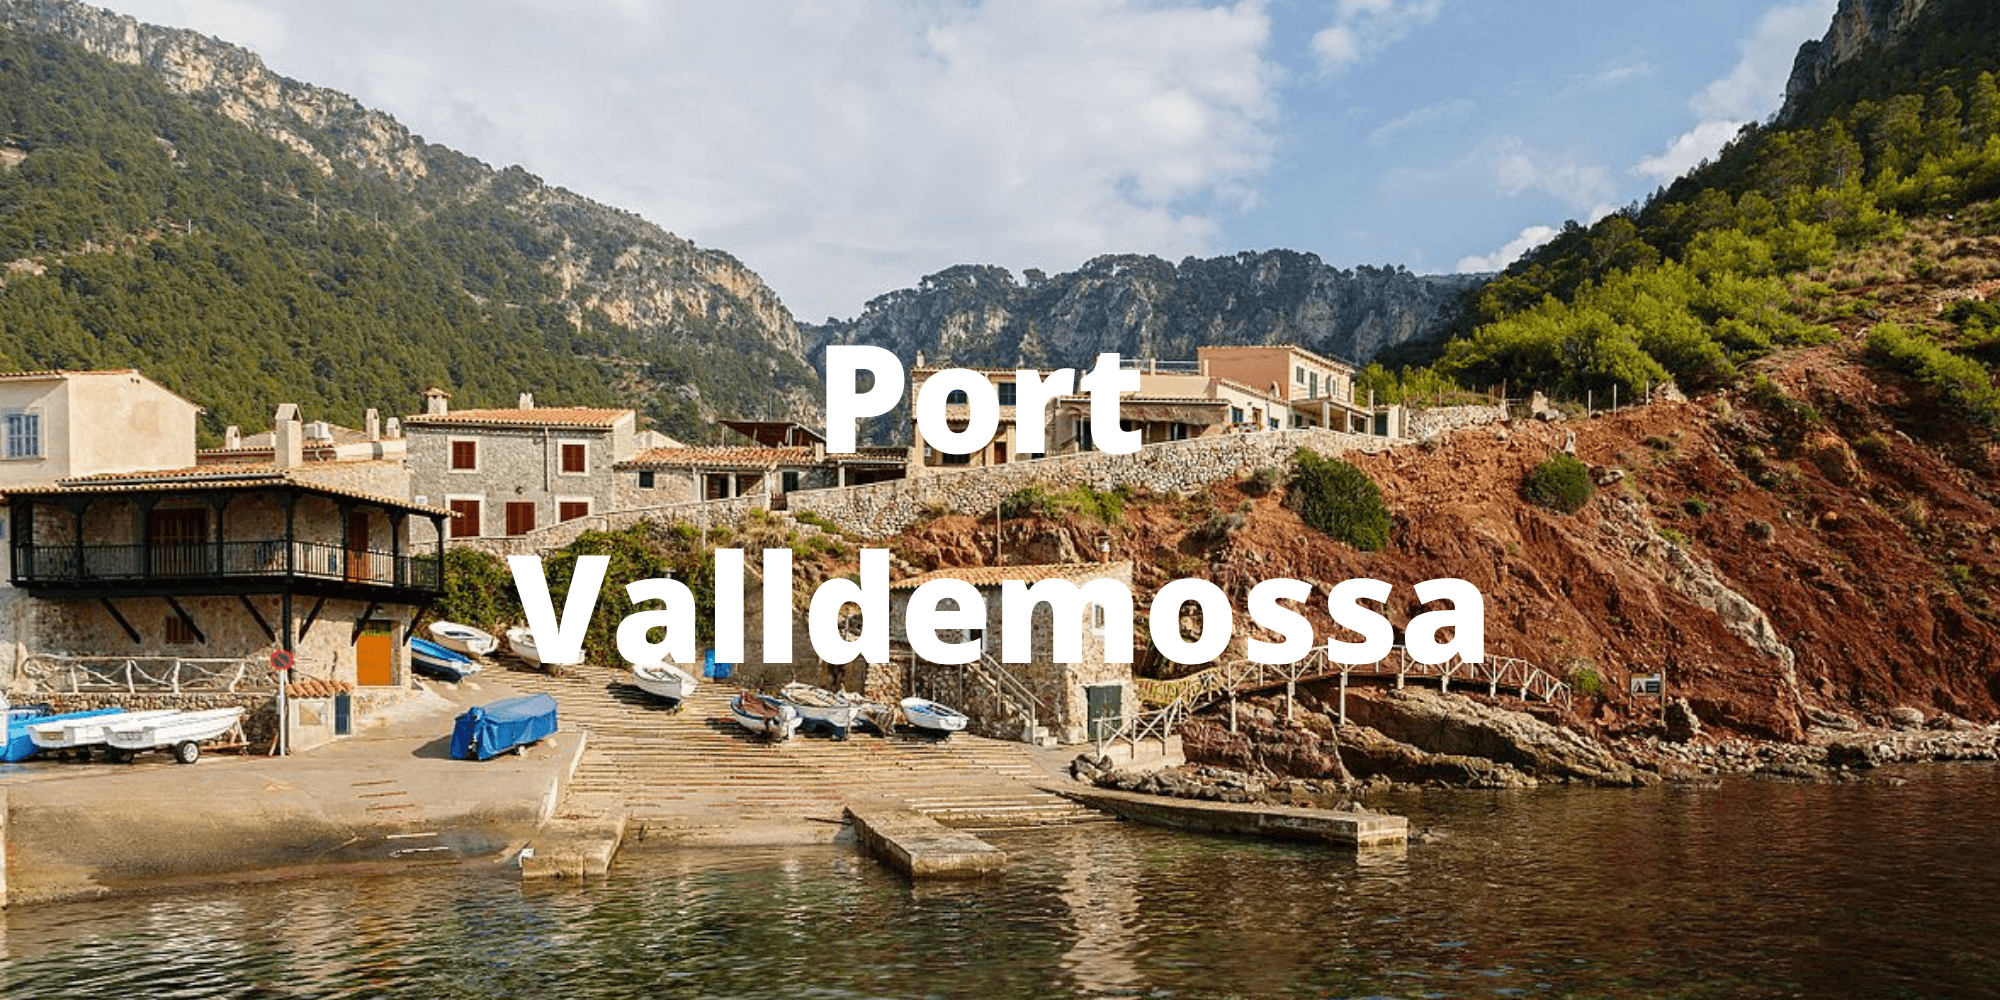 Port Valldemossa in Mallorca